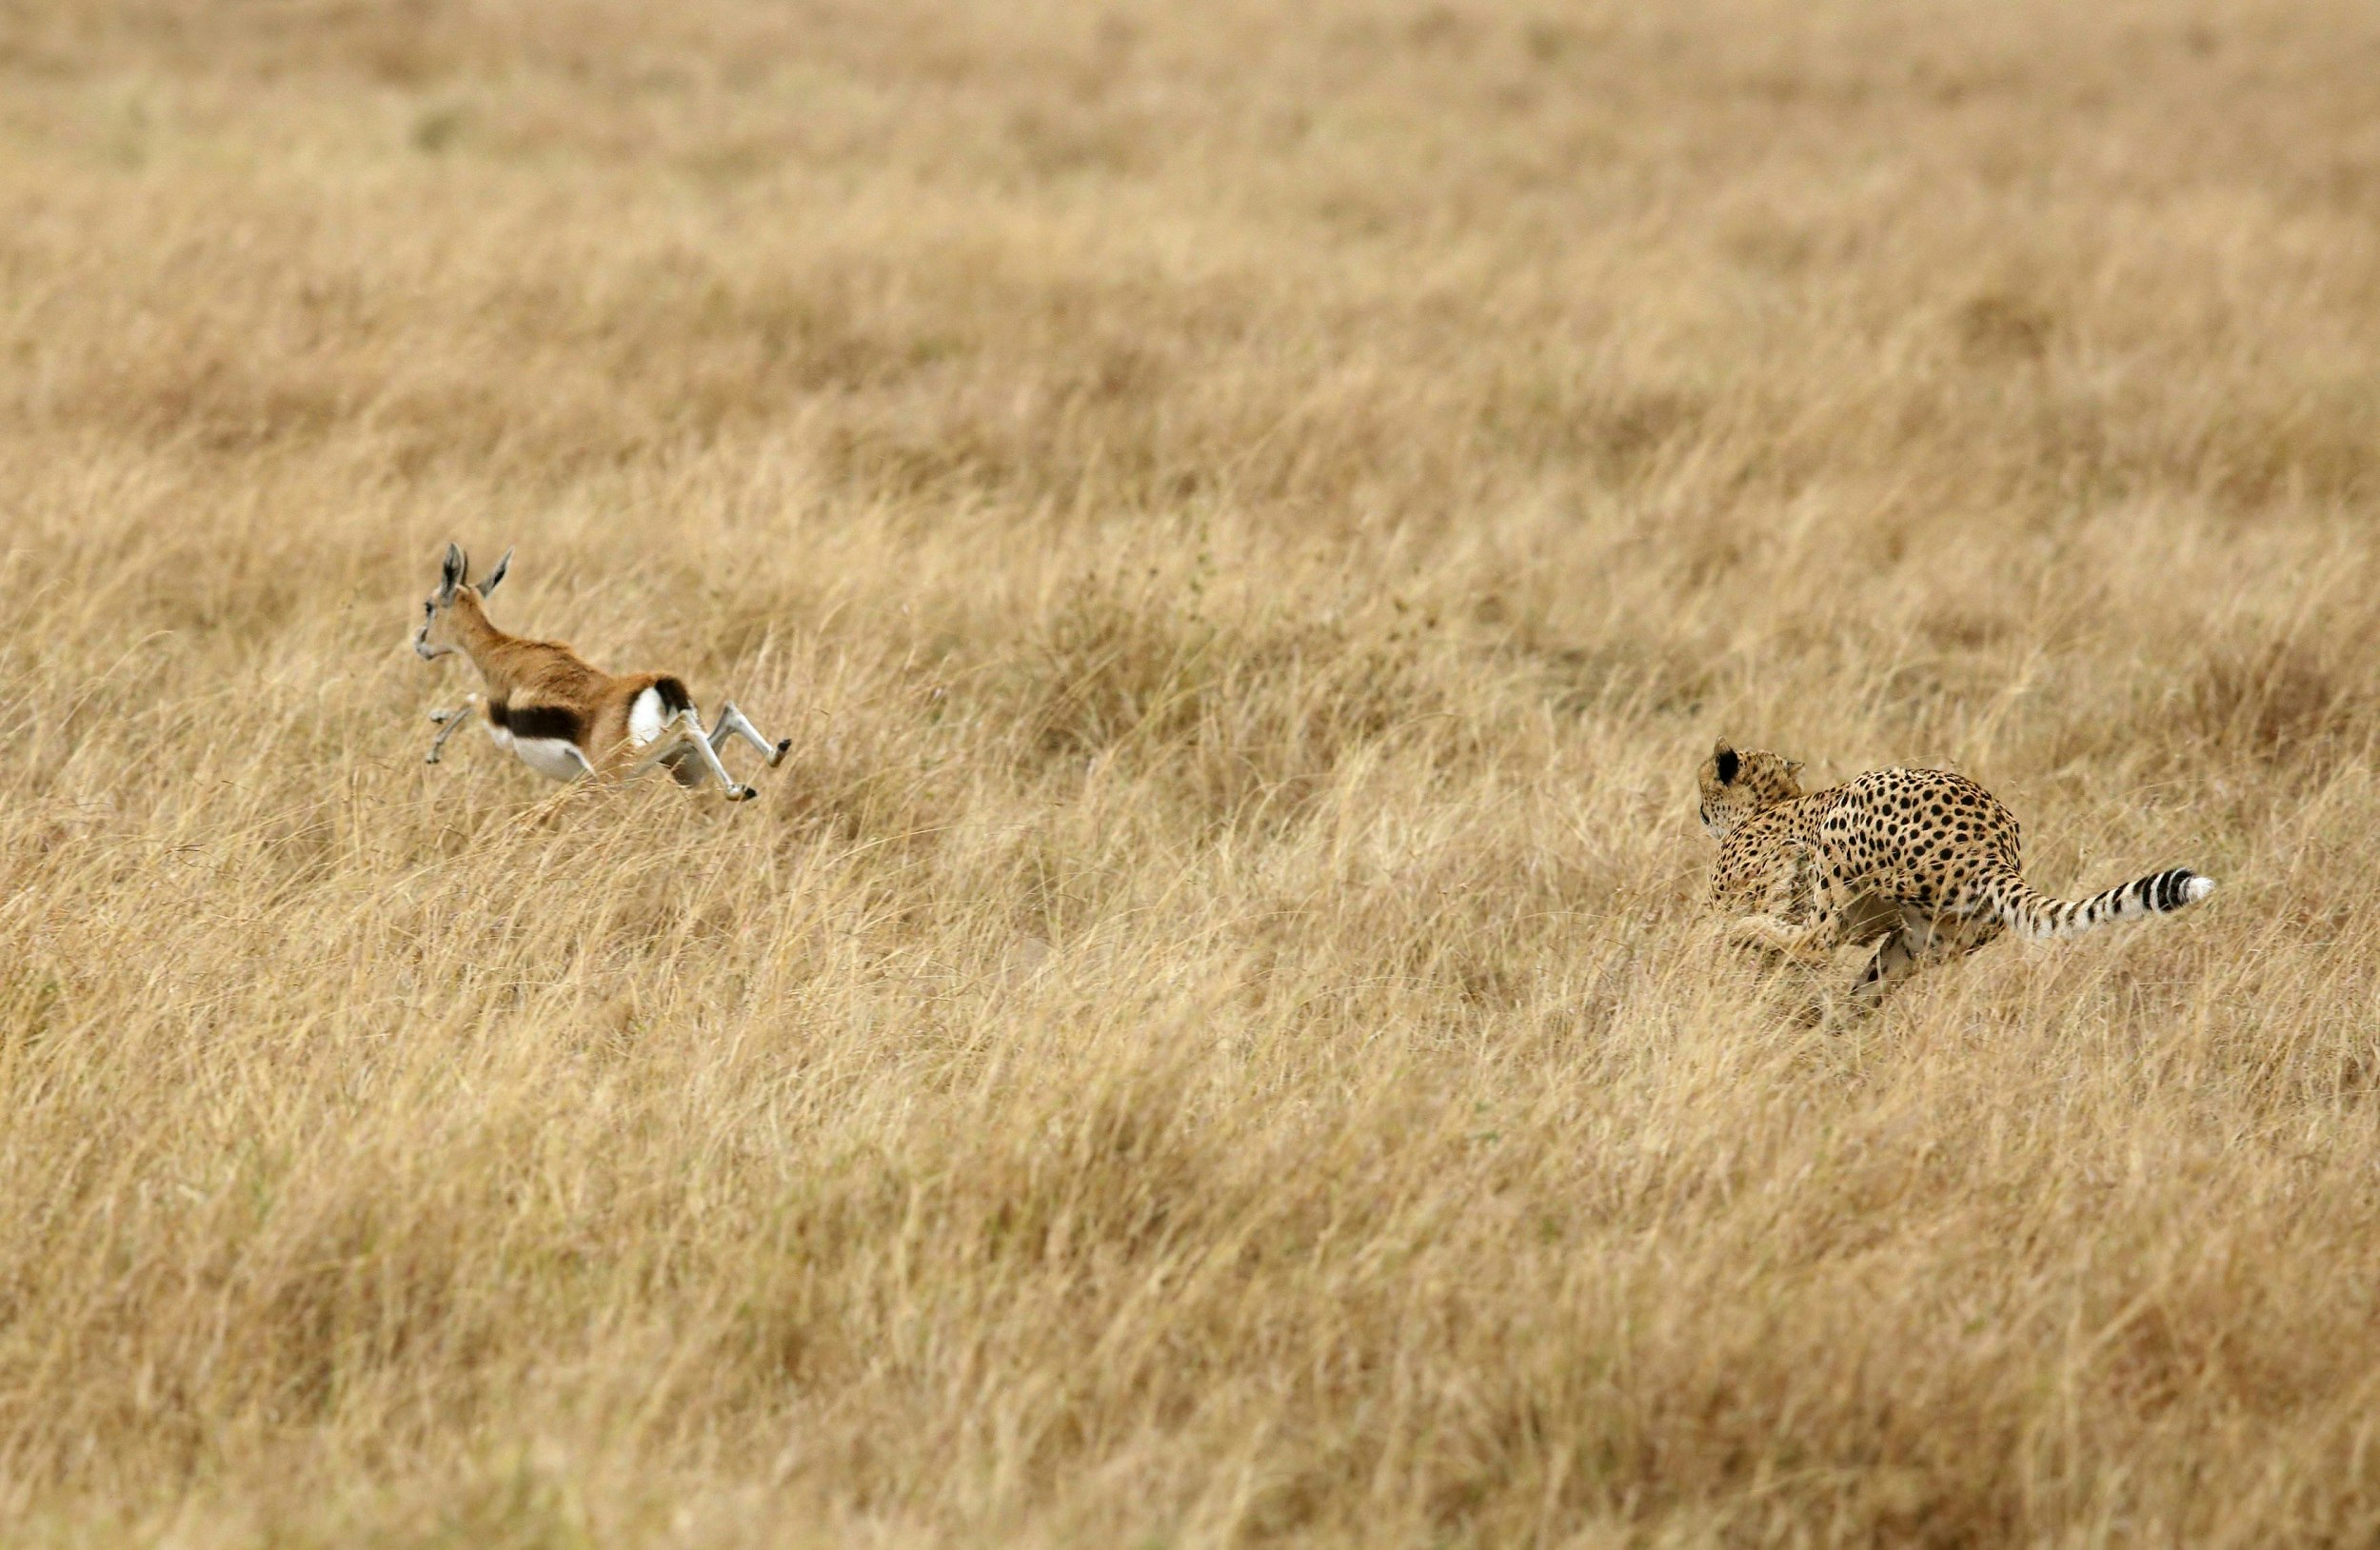 A cheetah at full speed running through golden grasses in hot pursuit of a gazelle.